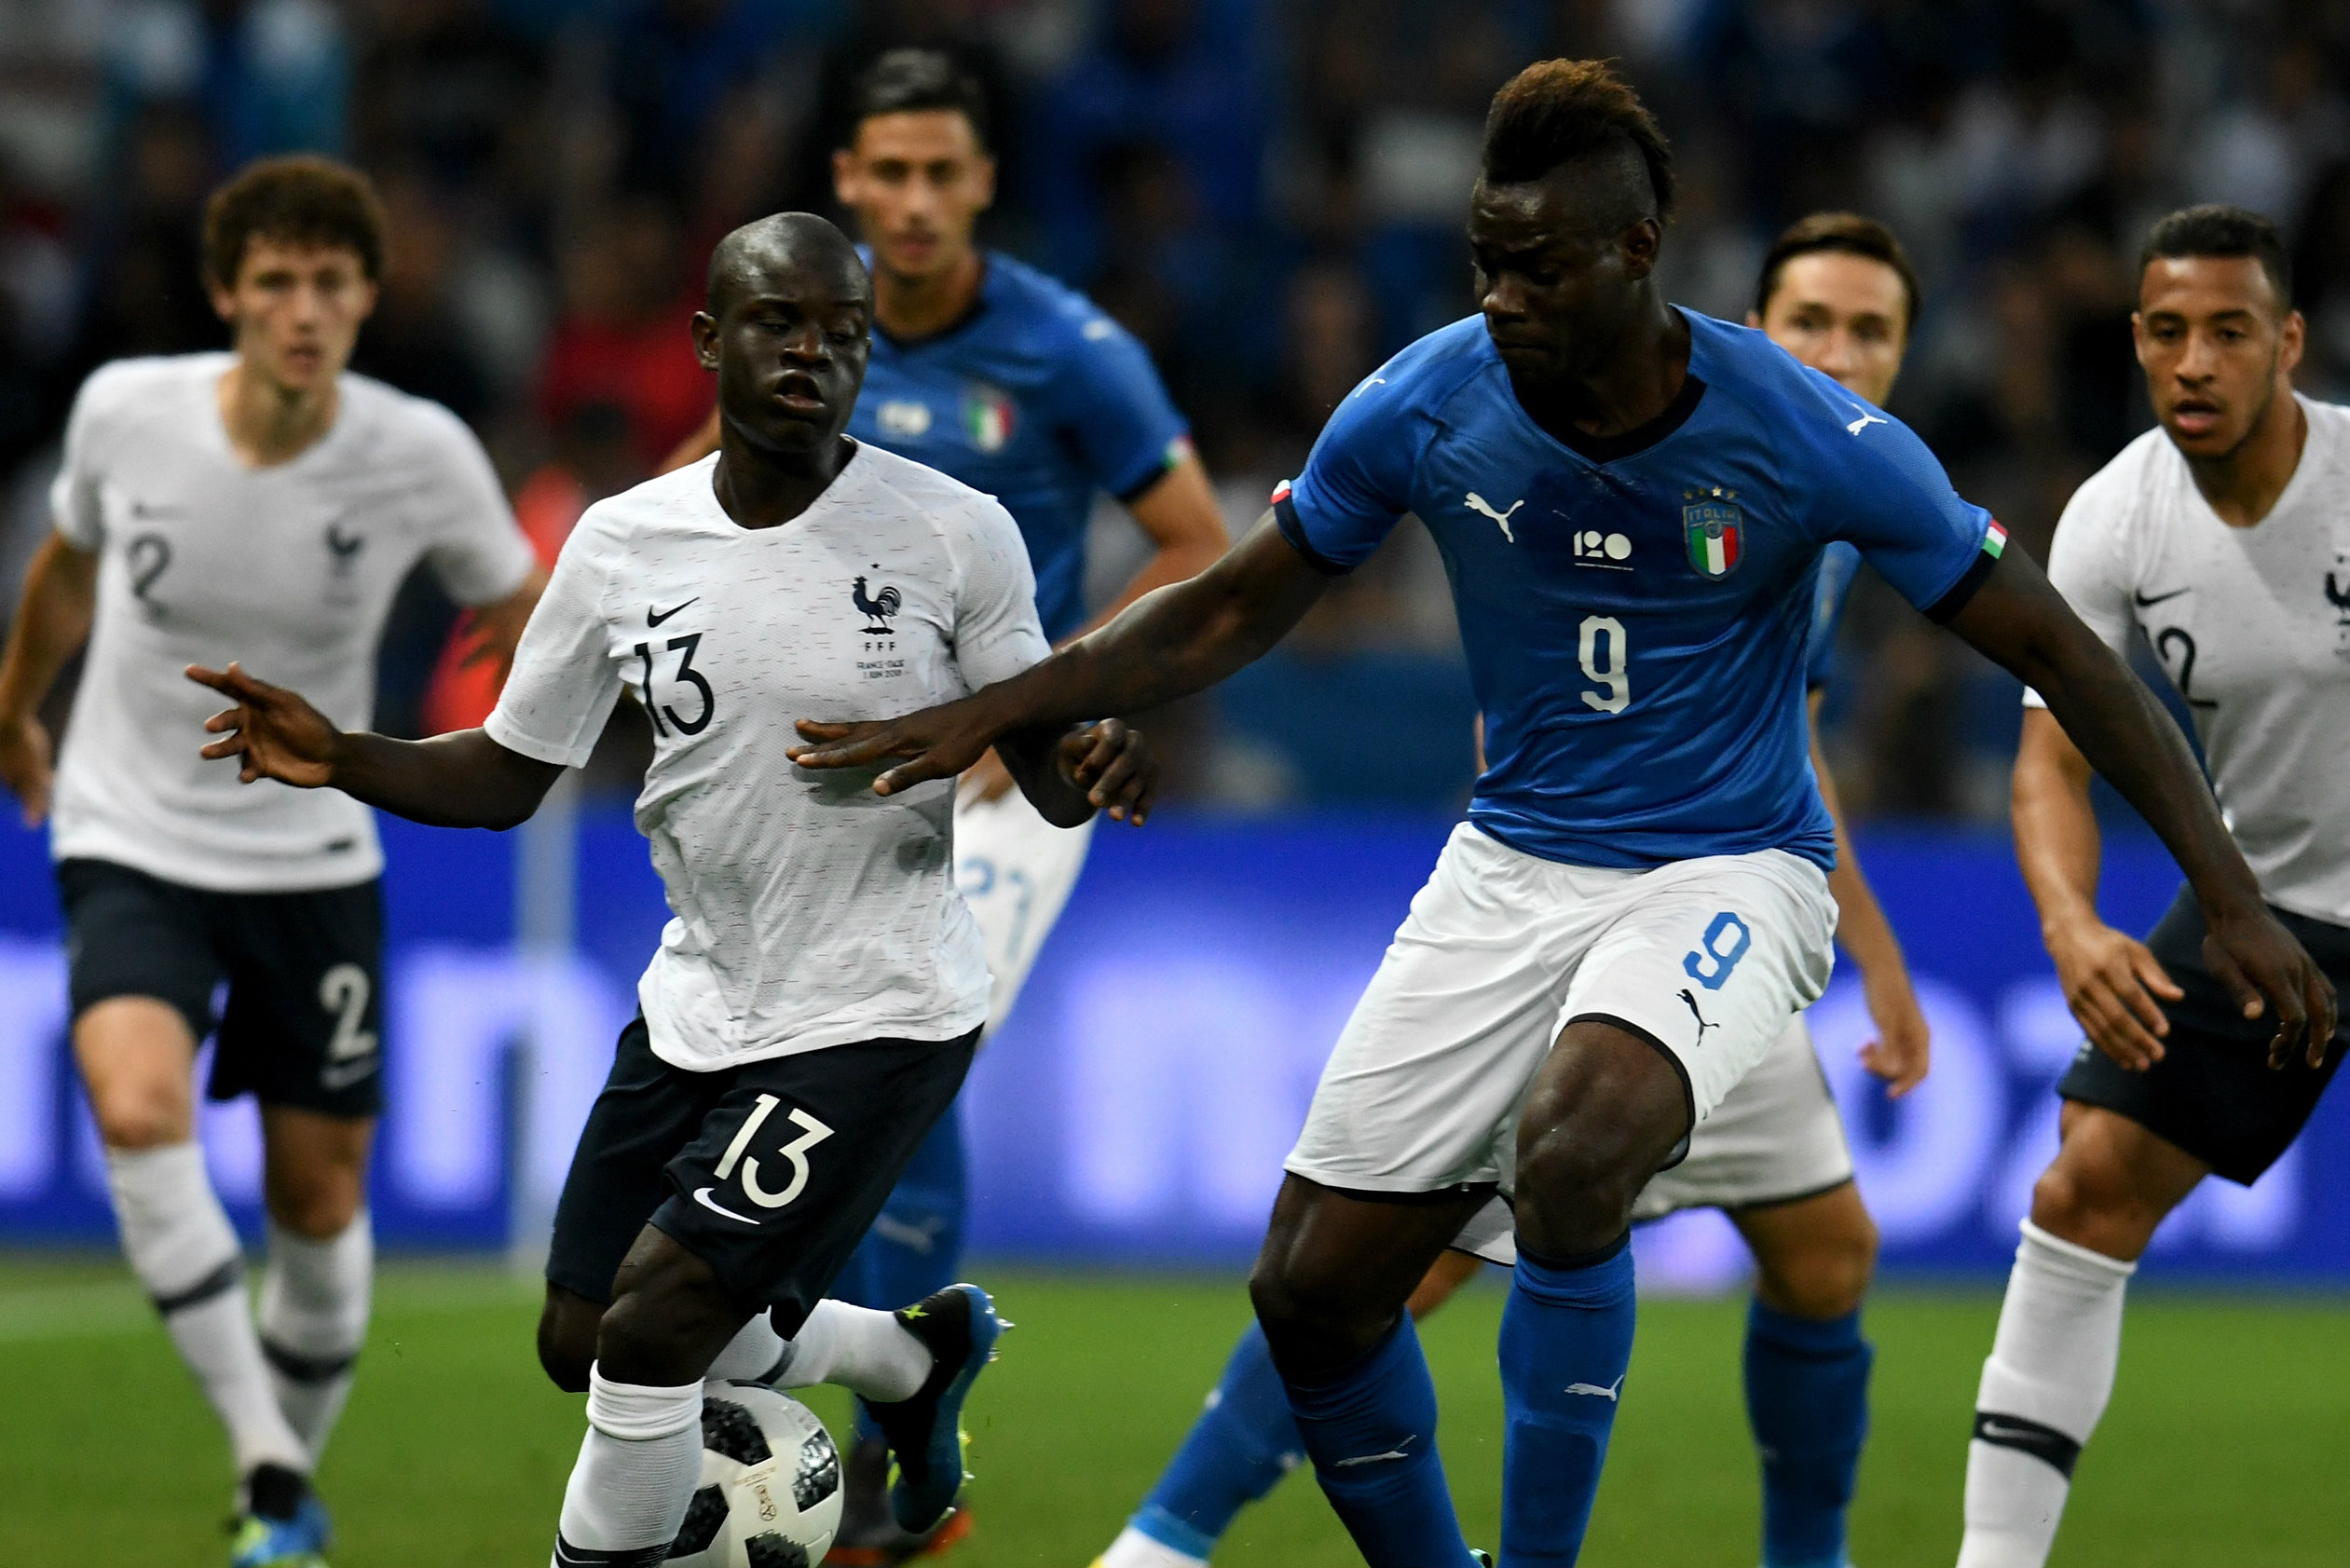 N'Golo Kante up against Italy's Mario Balotelli.